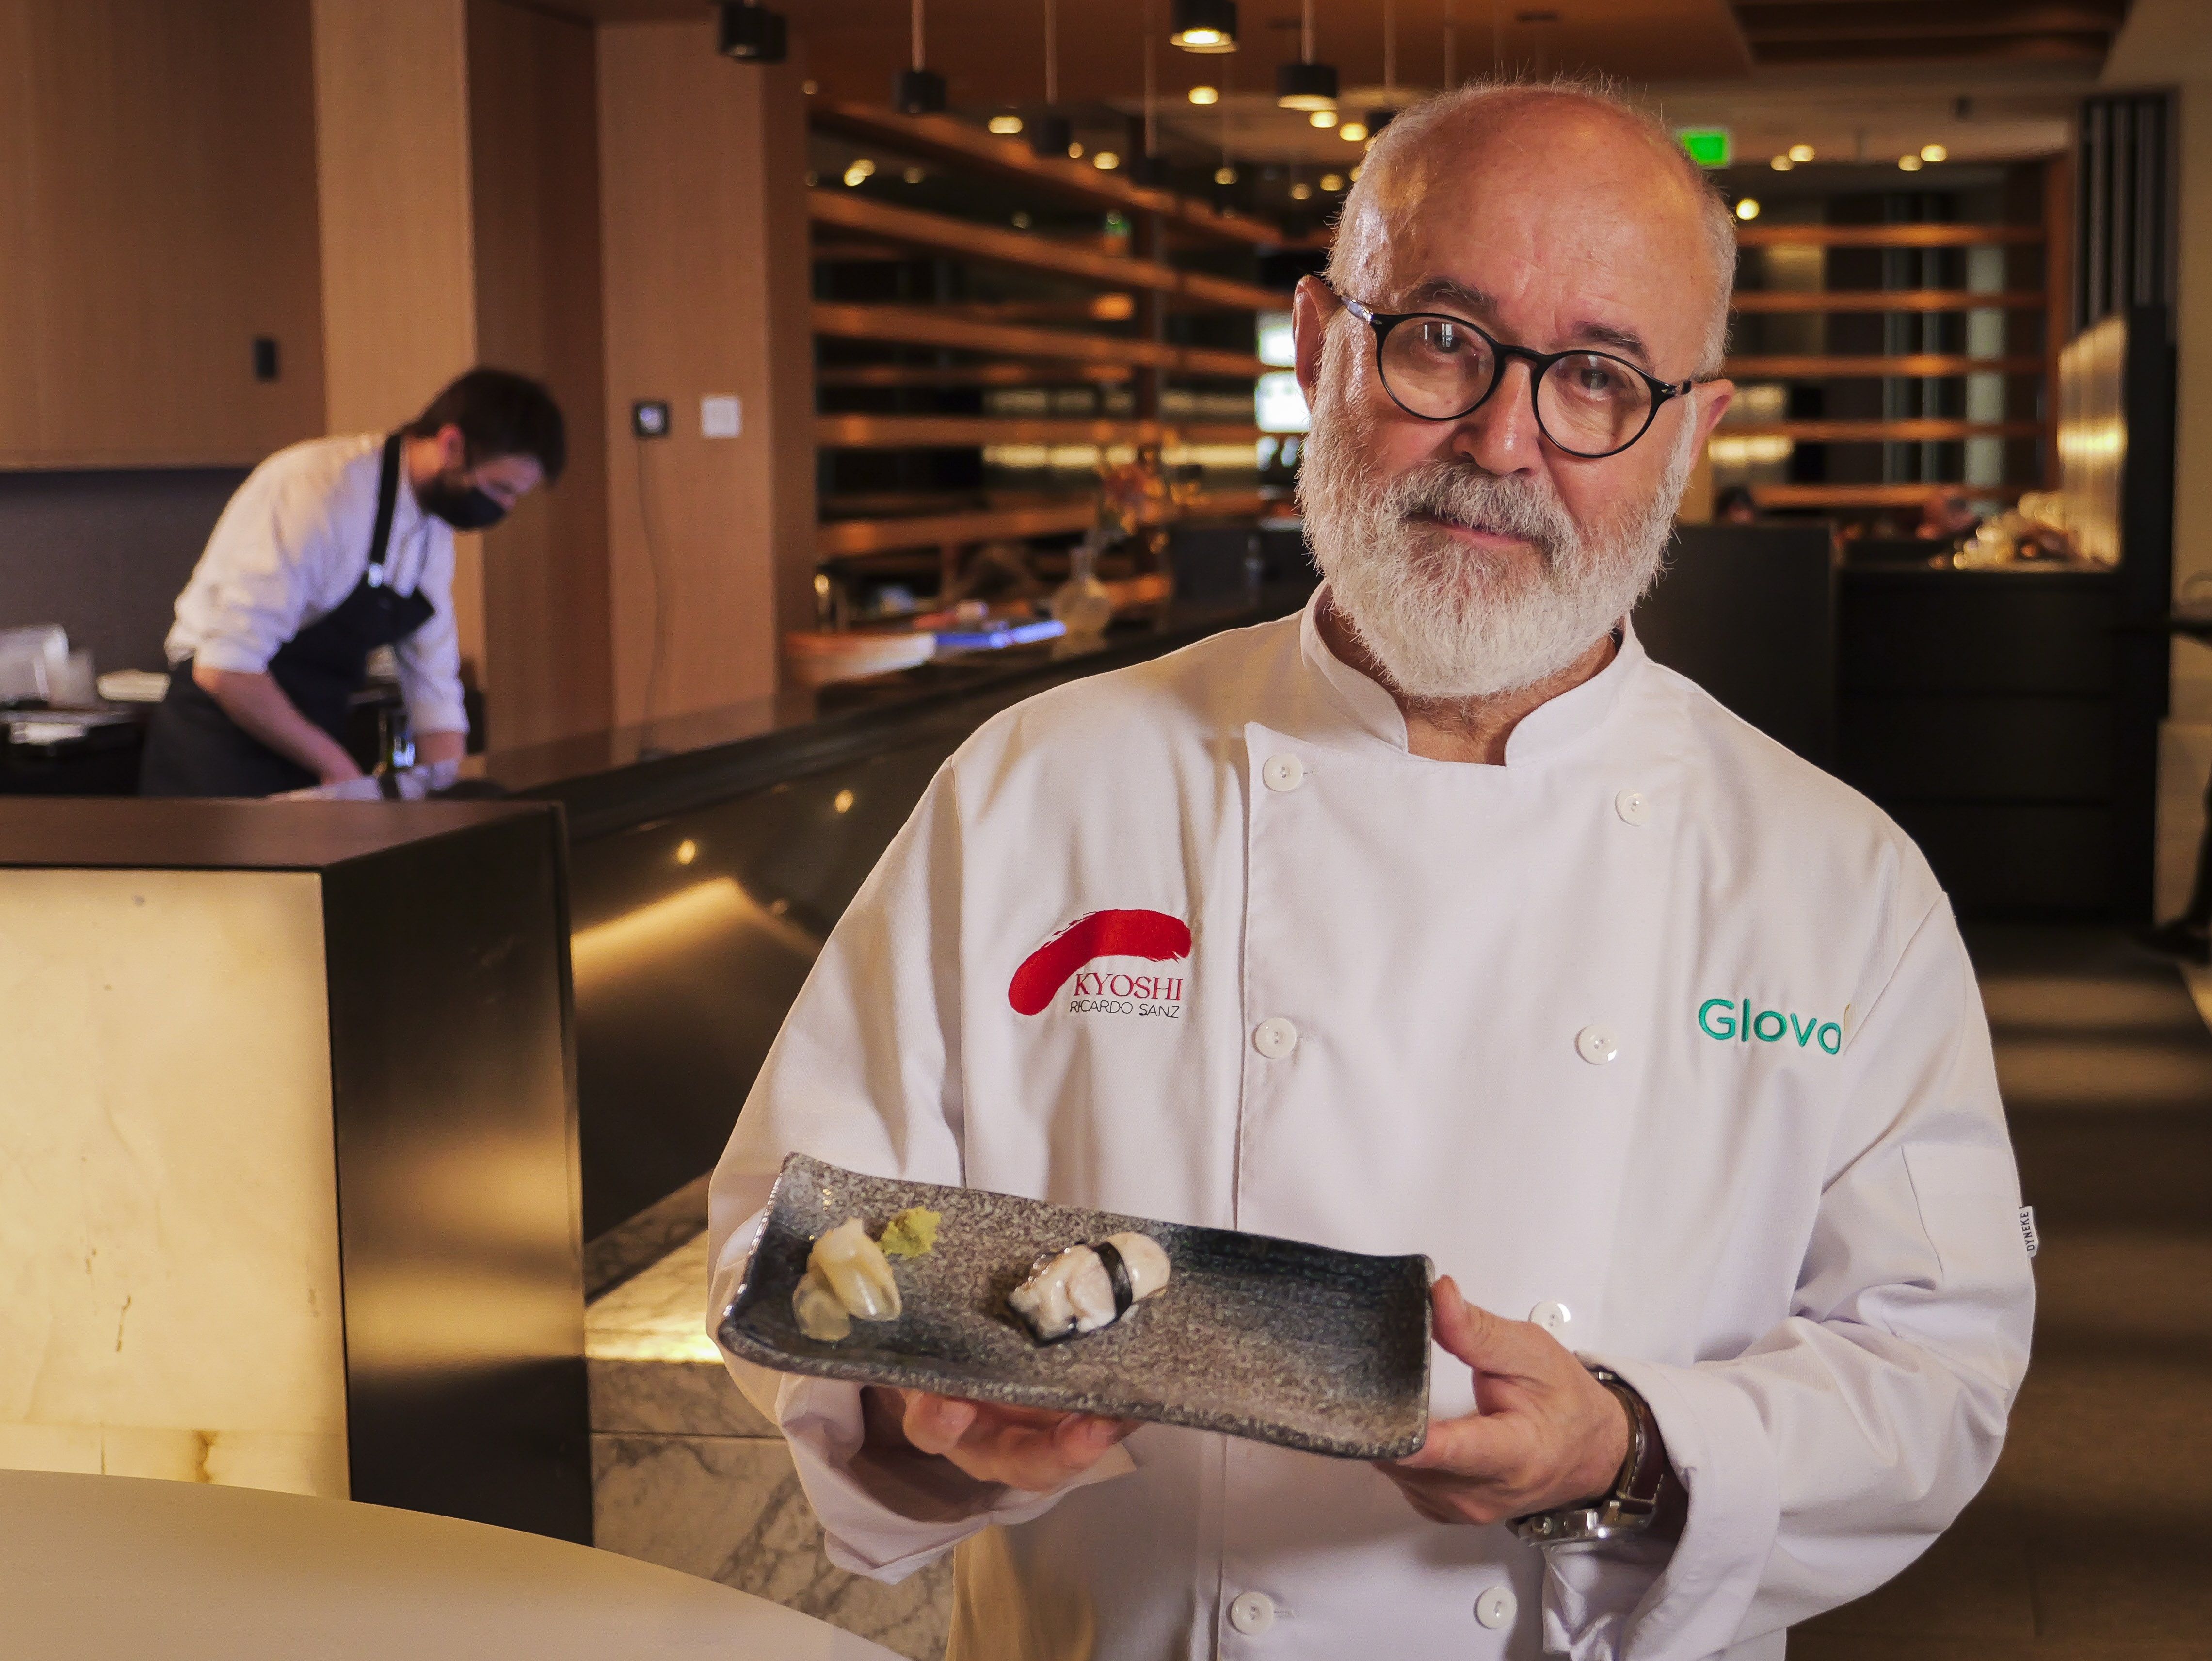 Kyoshi, el nuevo restaurante del chef Ricardo Sanz tras romper con Kabuki. Foto: Europa Press